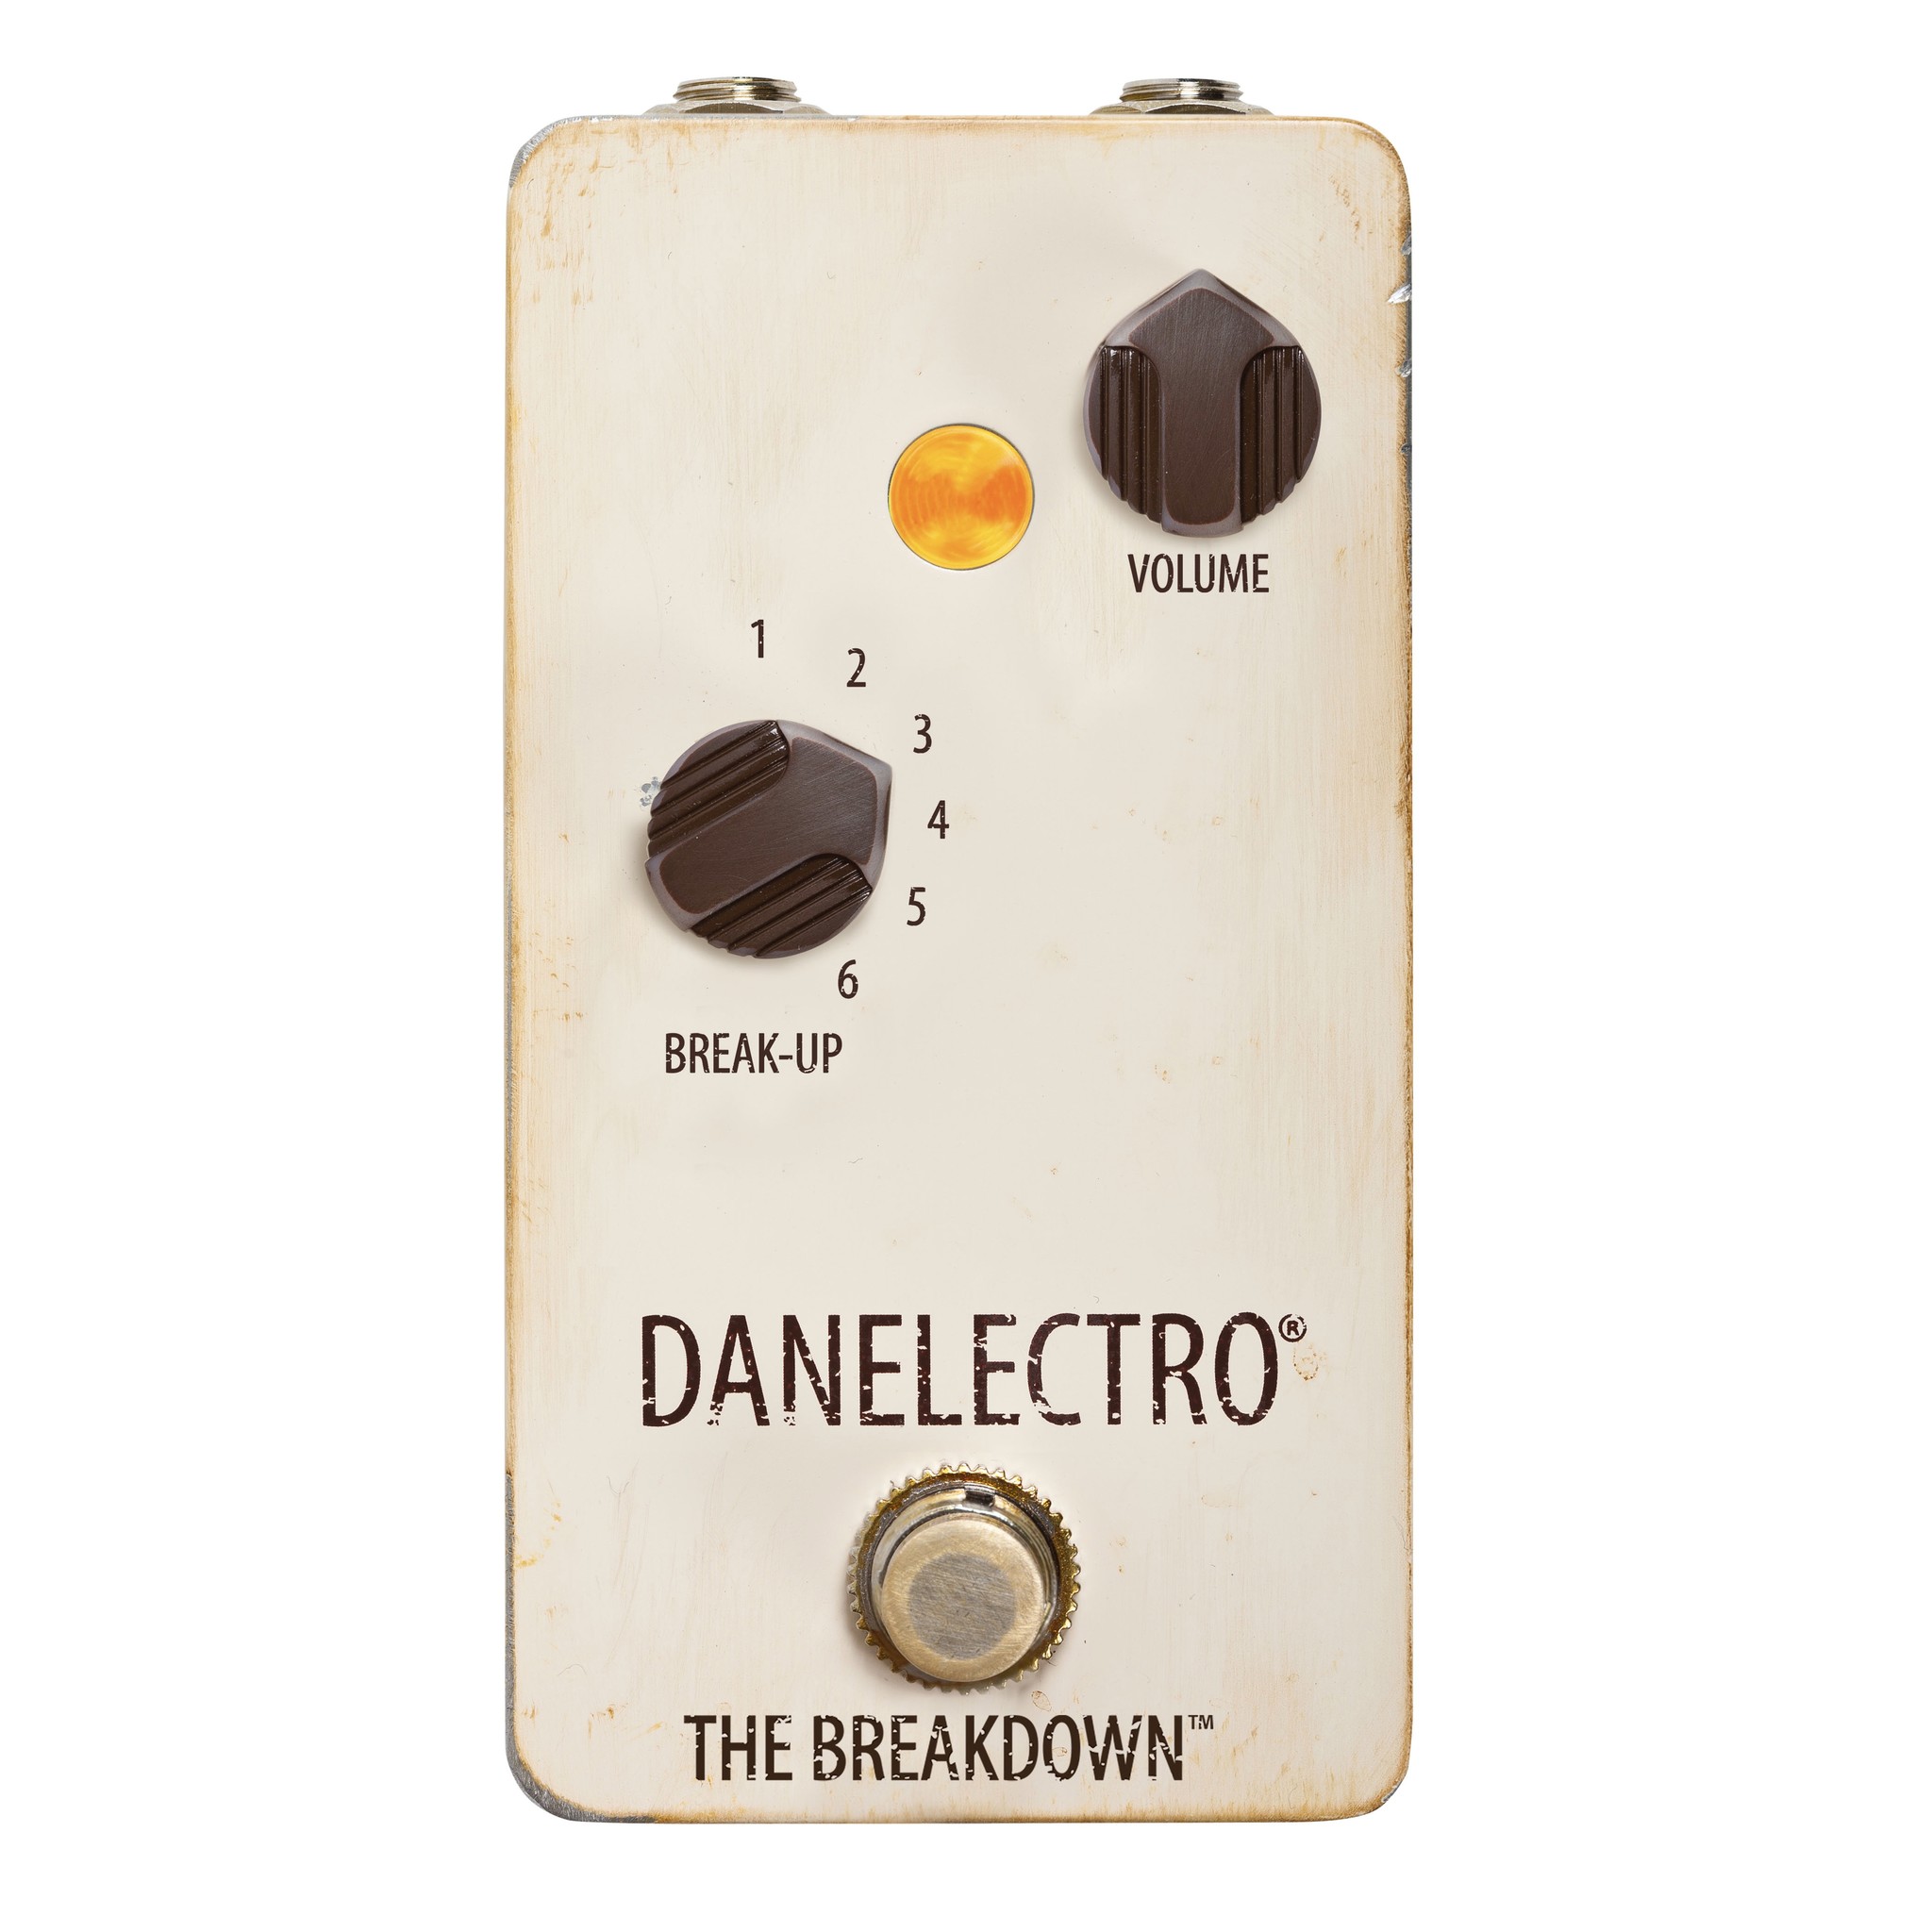 Danelectro - "The Breakdown" - Early JP/Zep-Style Overdrive